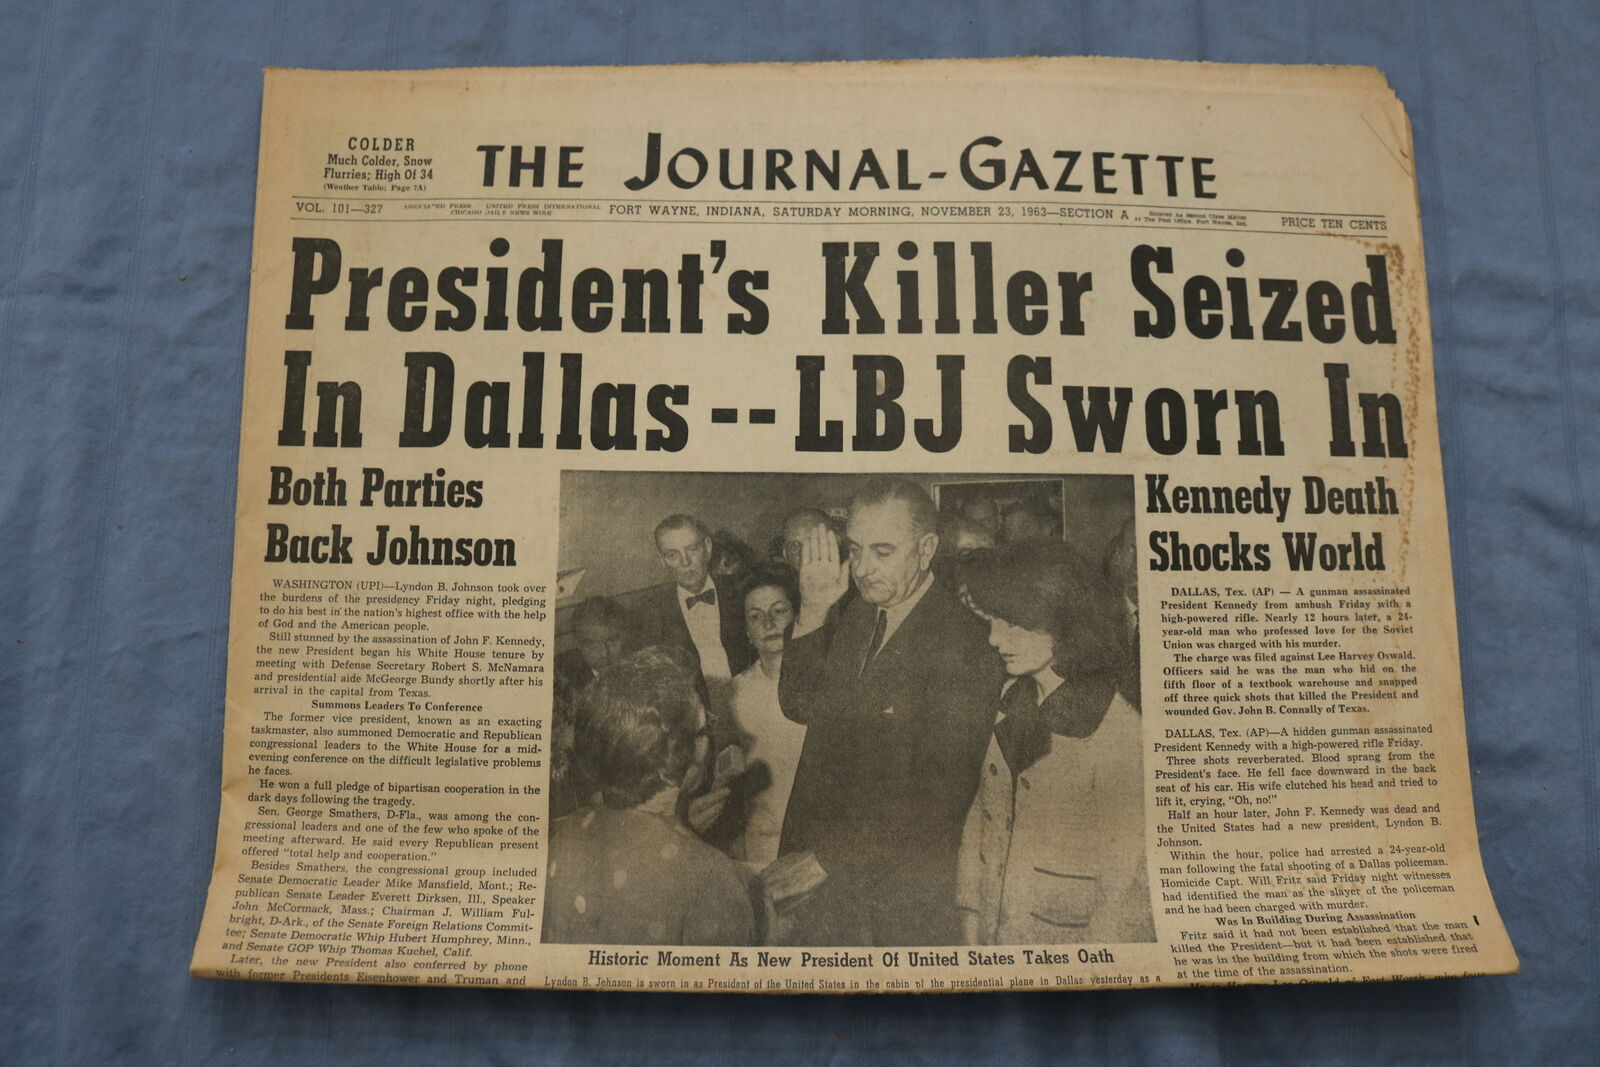 1963 NOV 23 THE JOURNAL-GAZETTE NEWSPAPER - PRESIDENT'S KILLER SEIZED - NP 8546